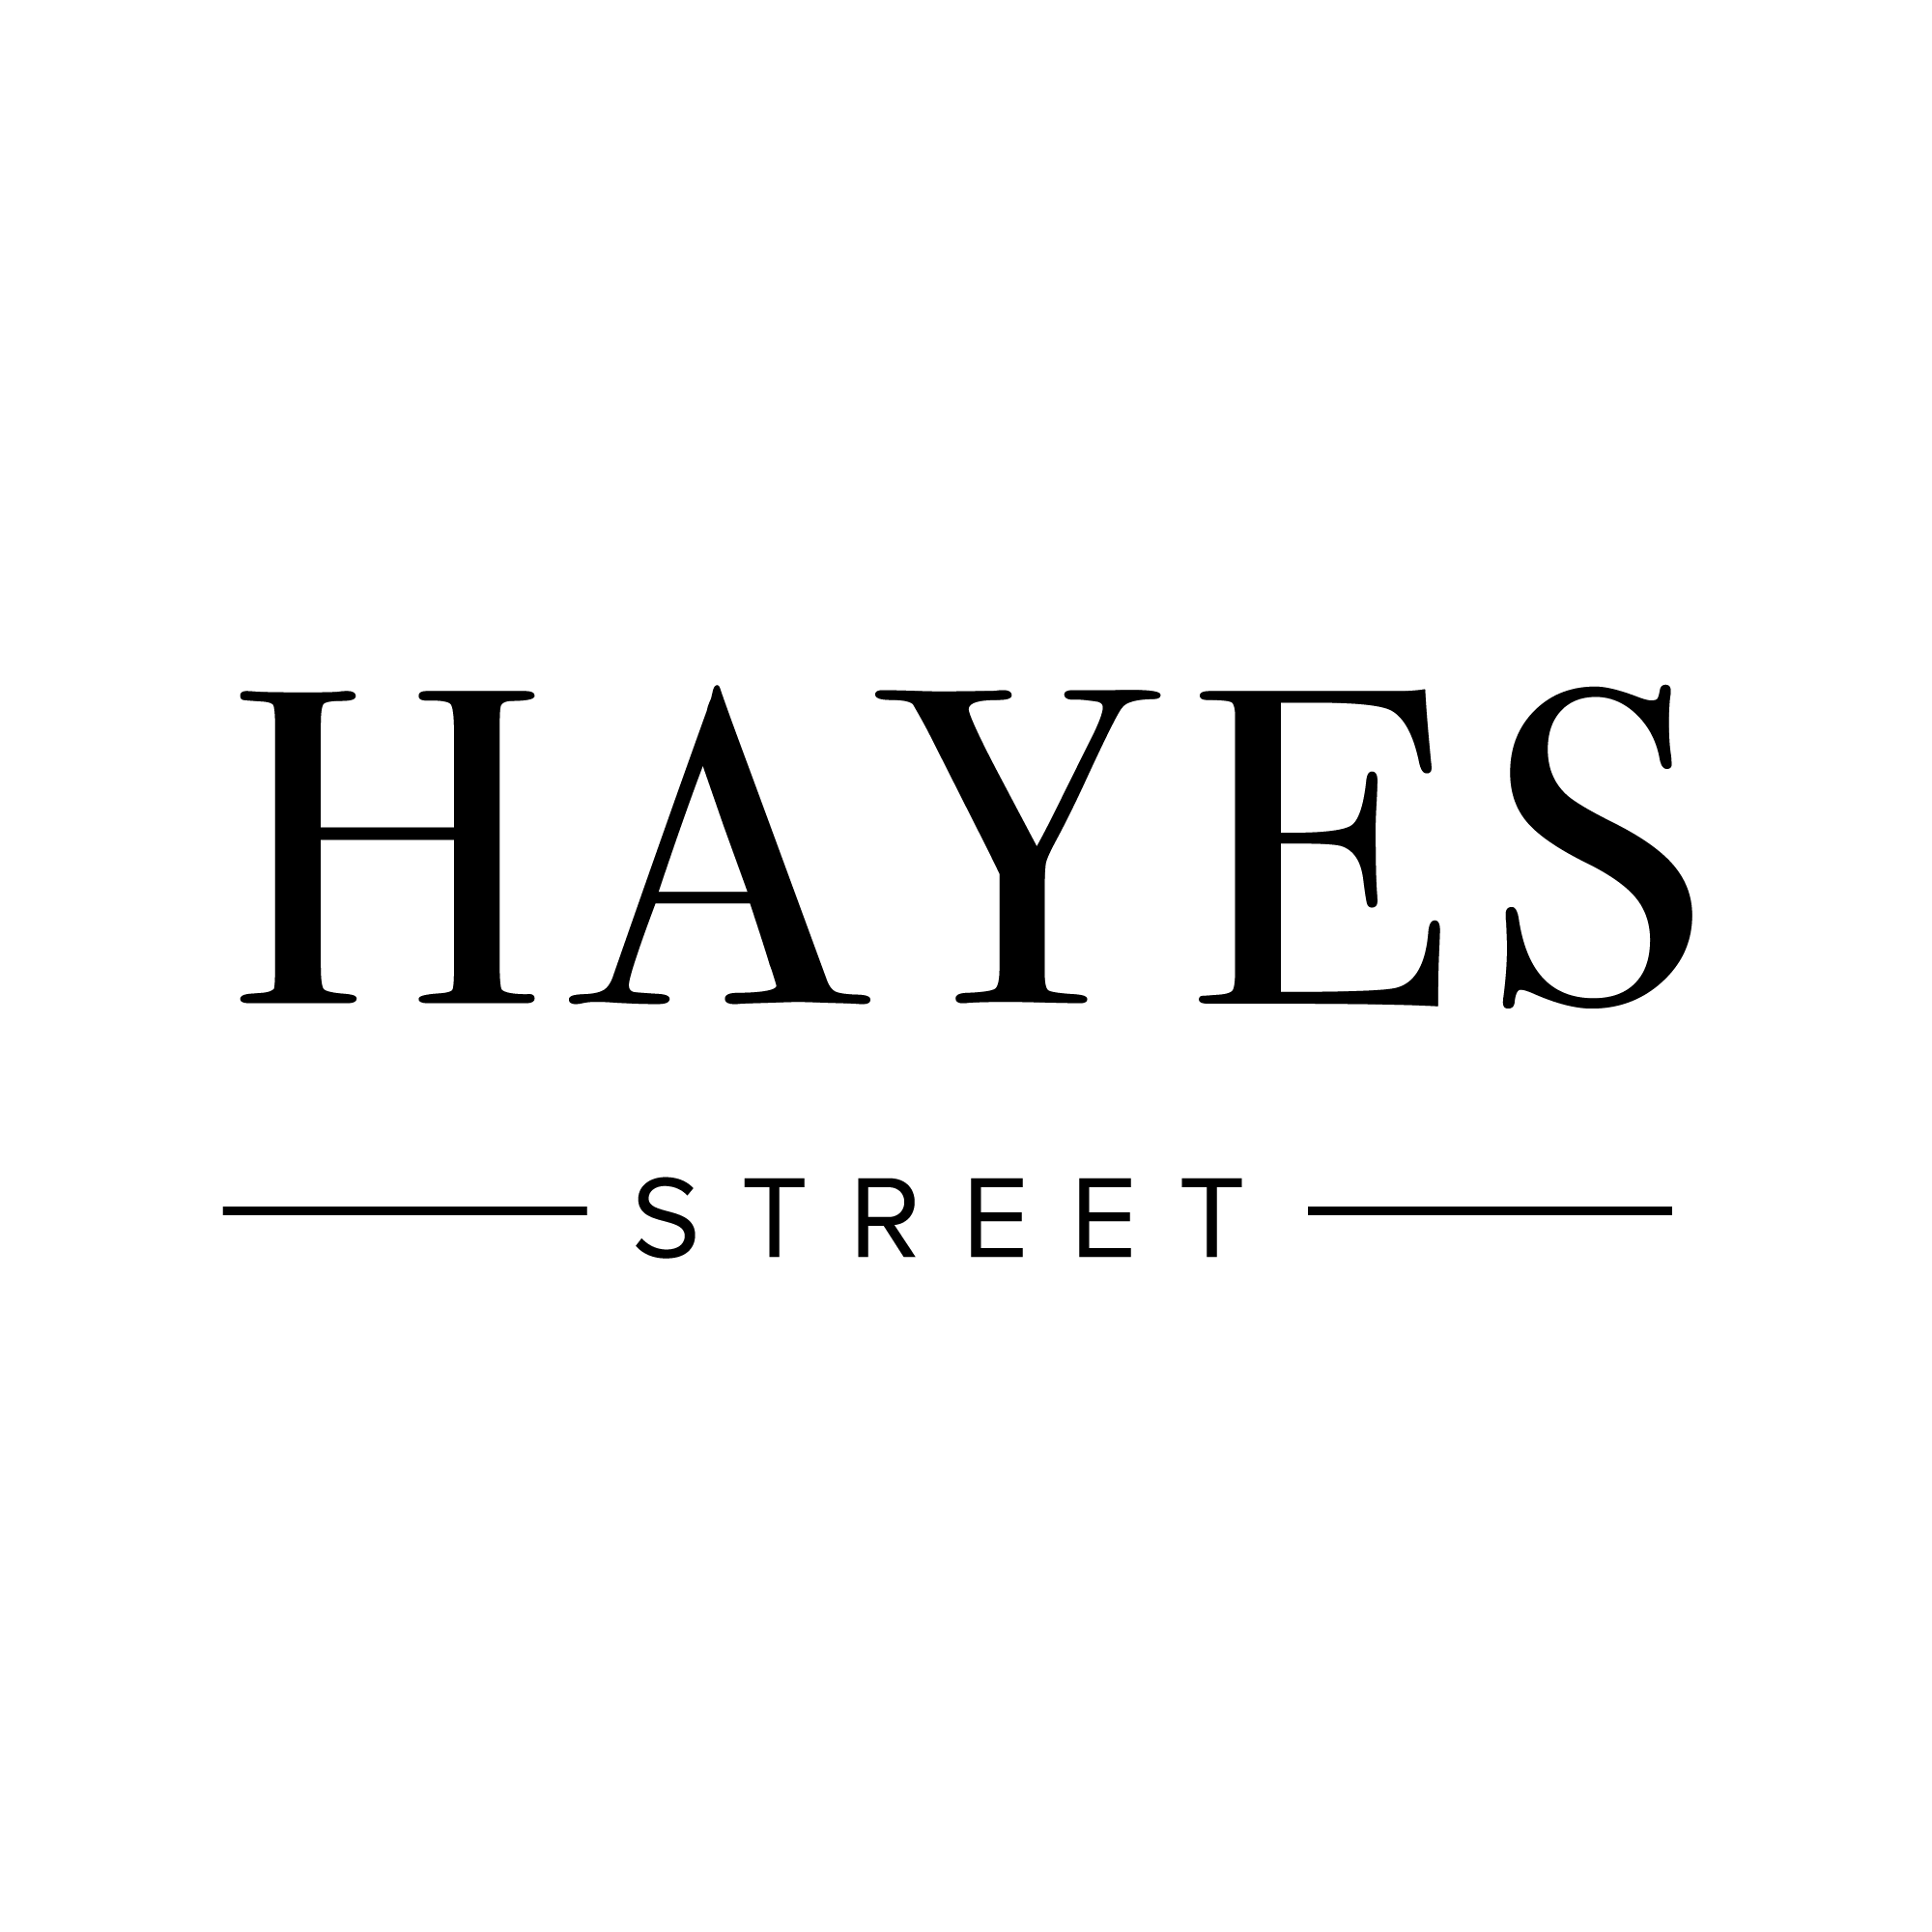 Hayes Street Logo and Brand Kit